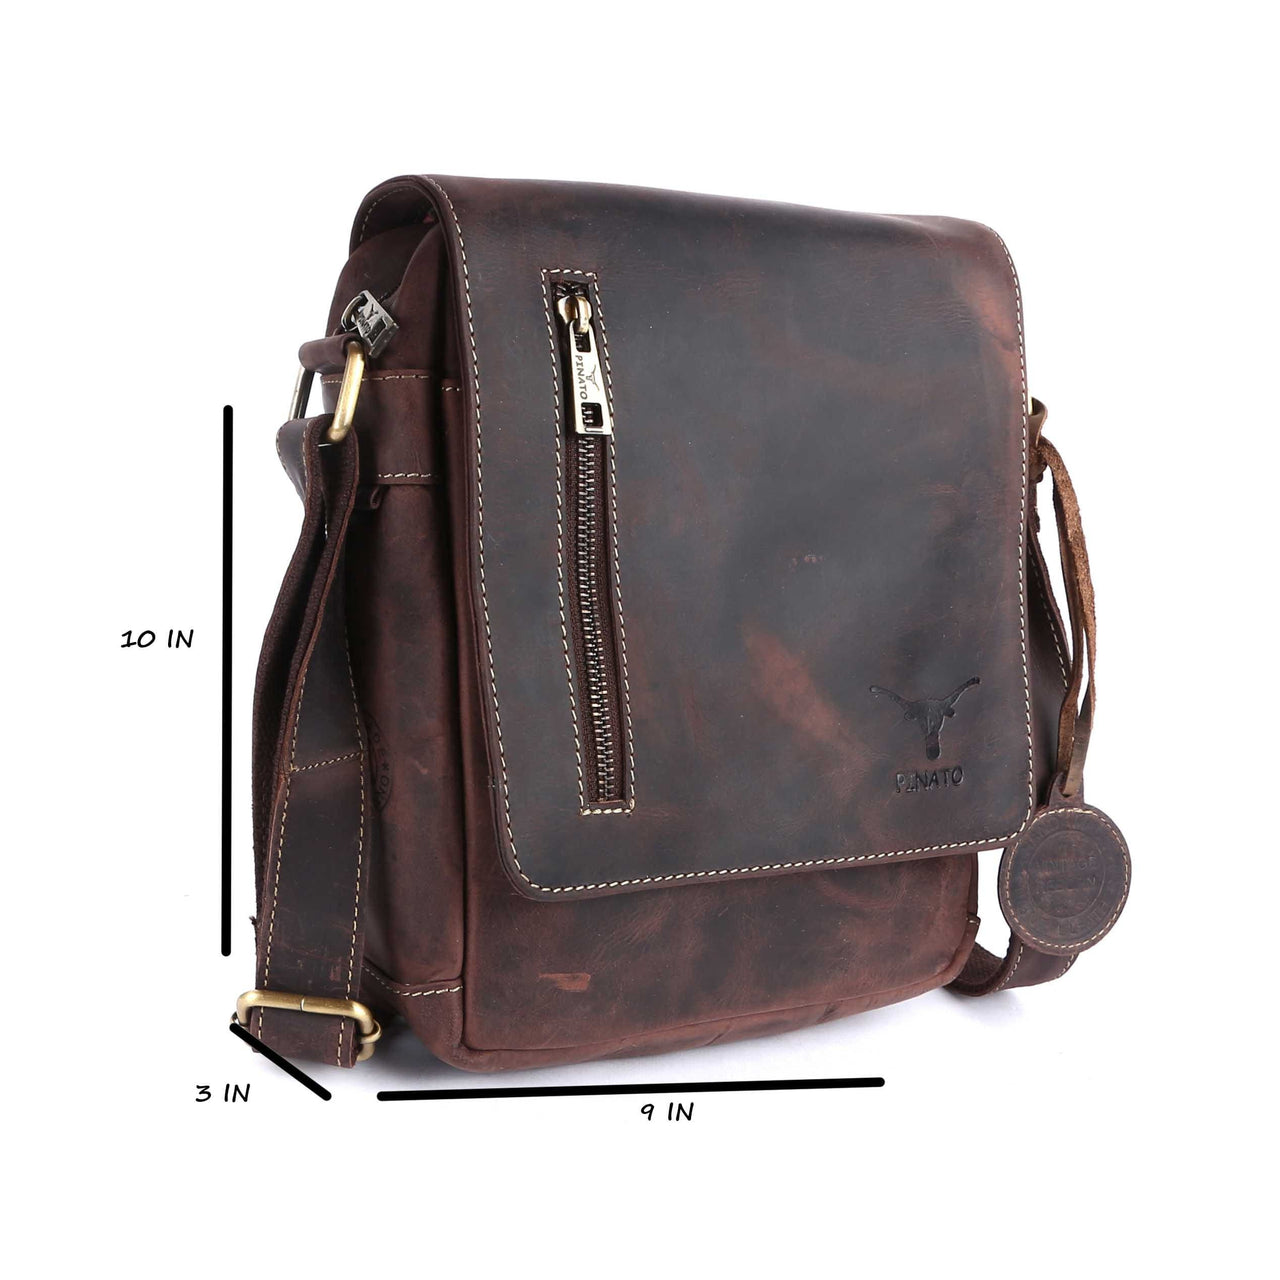 Pinato Genuine  Leather Messenger Bag Brown for Women & Men (PL-2718)